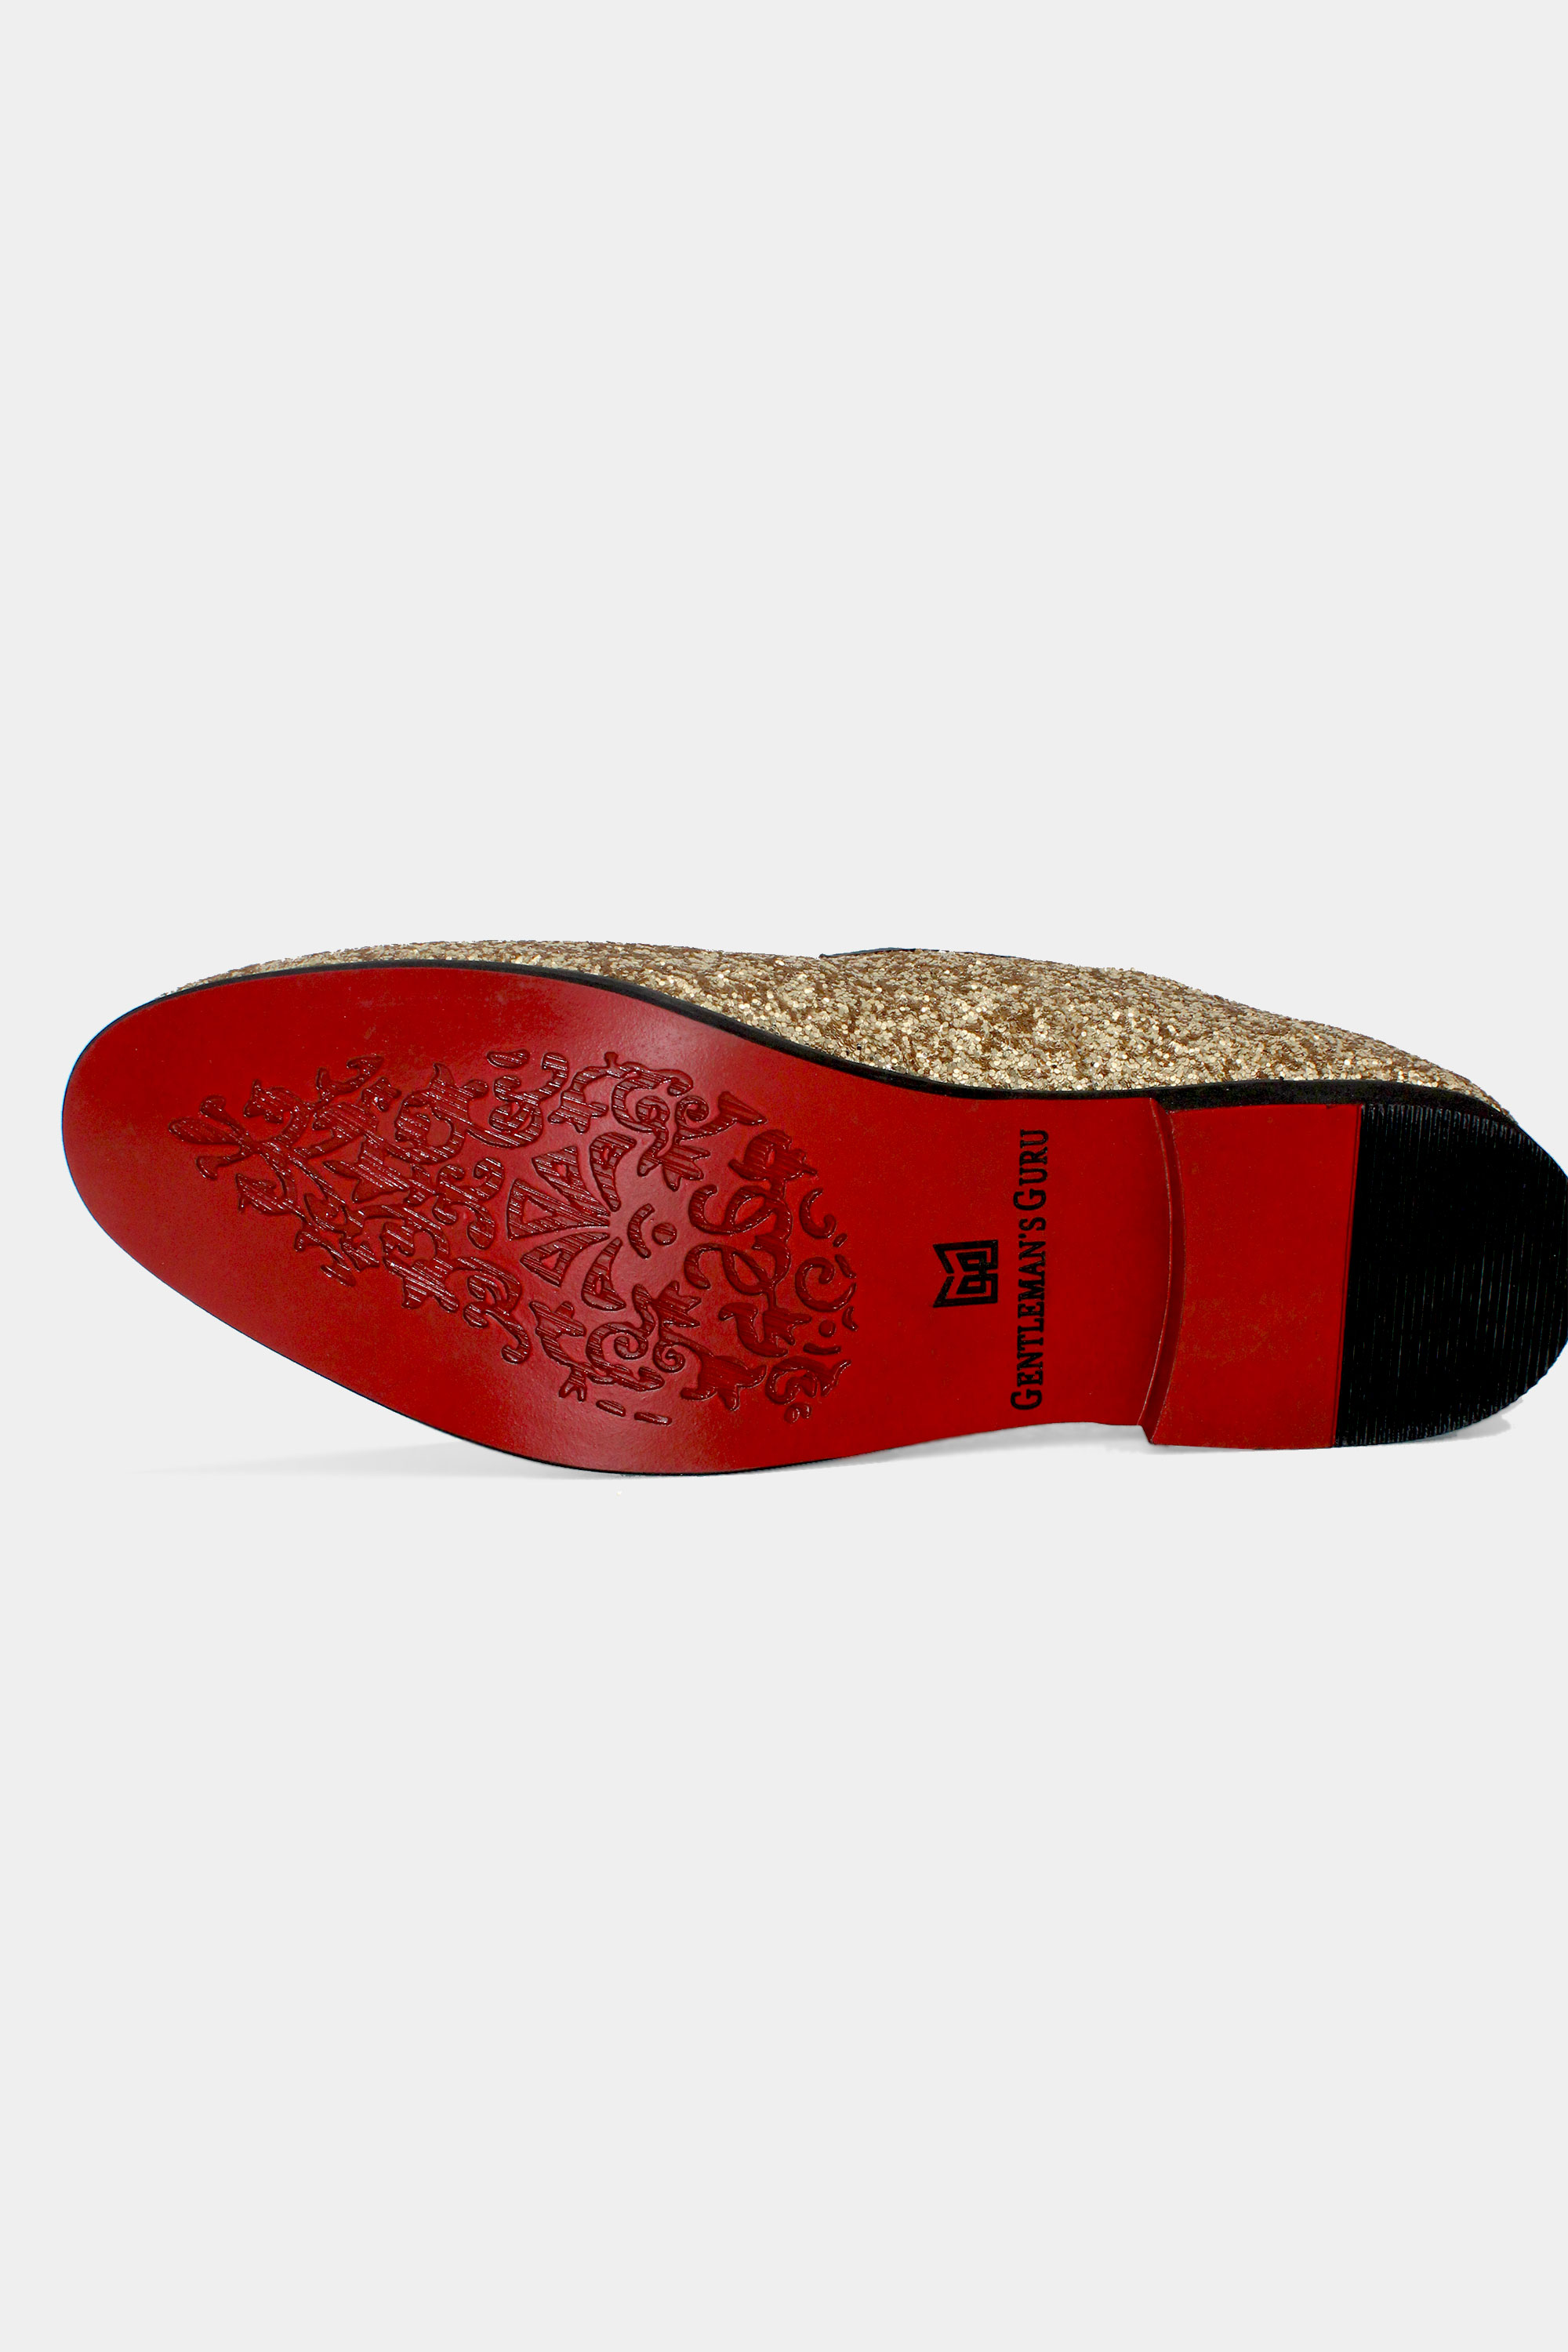 Gold-Loafers-Designer-Shoes-from-Gentlemansguru.com